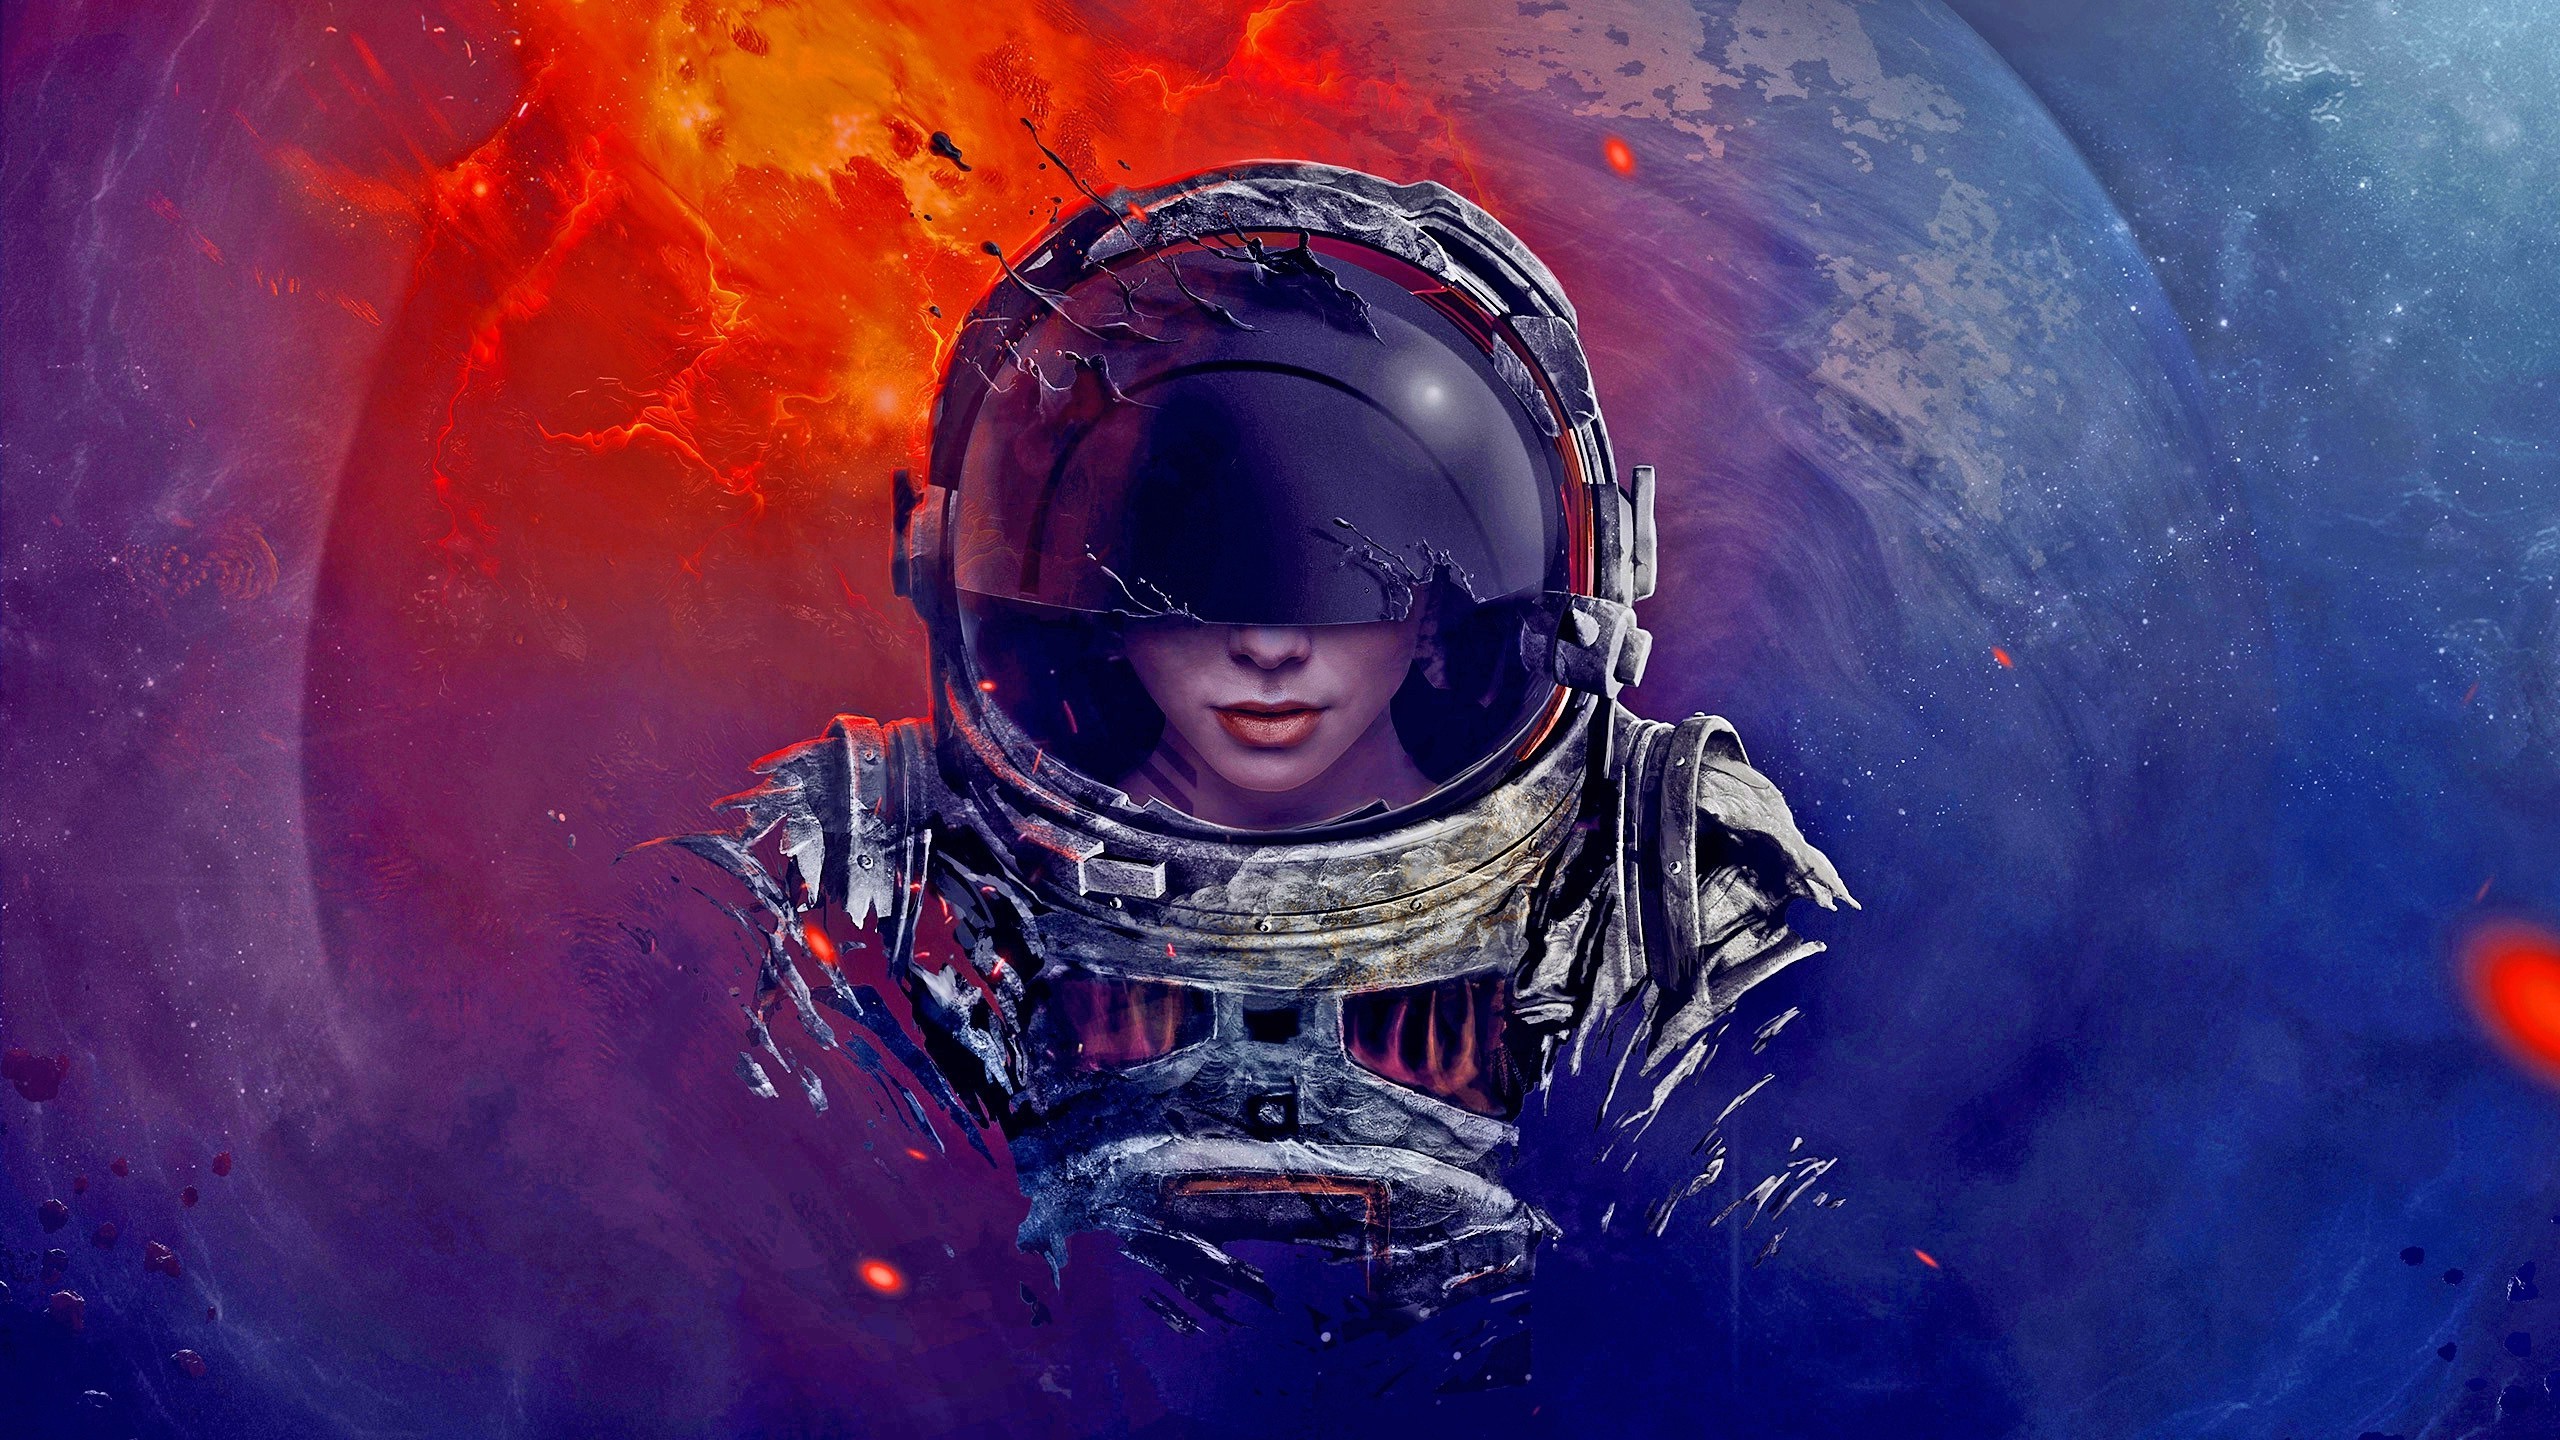 digital Art, Astronaut, Spacesuit, Helmet, Universe, Space, Fire, Women